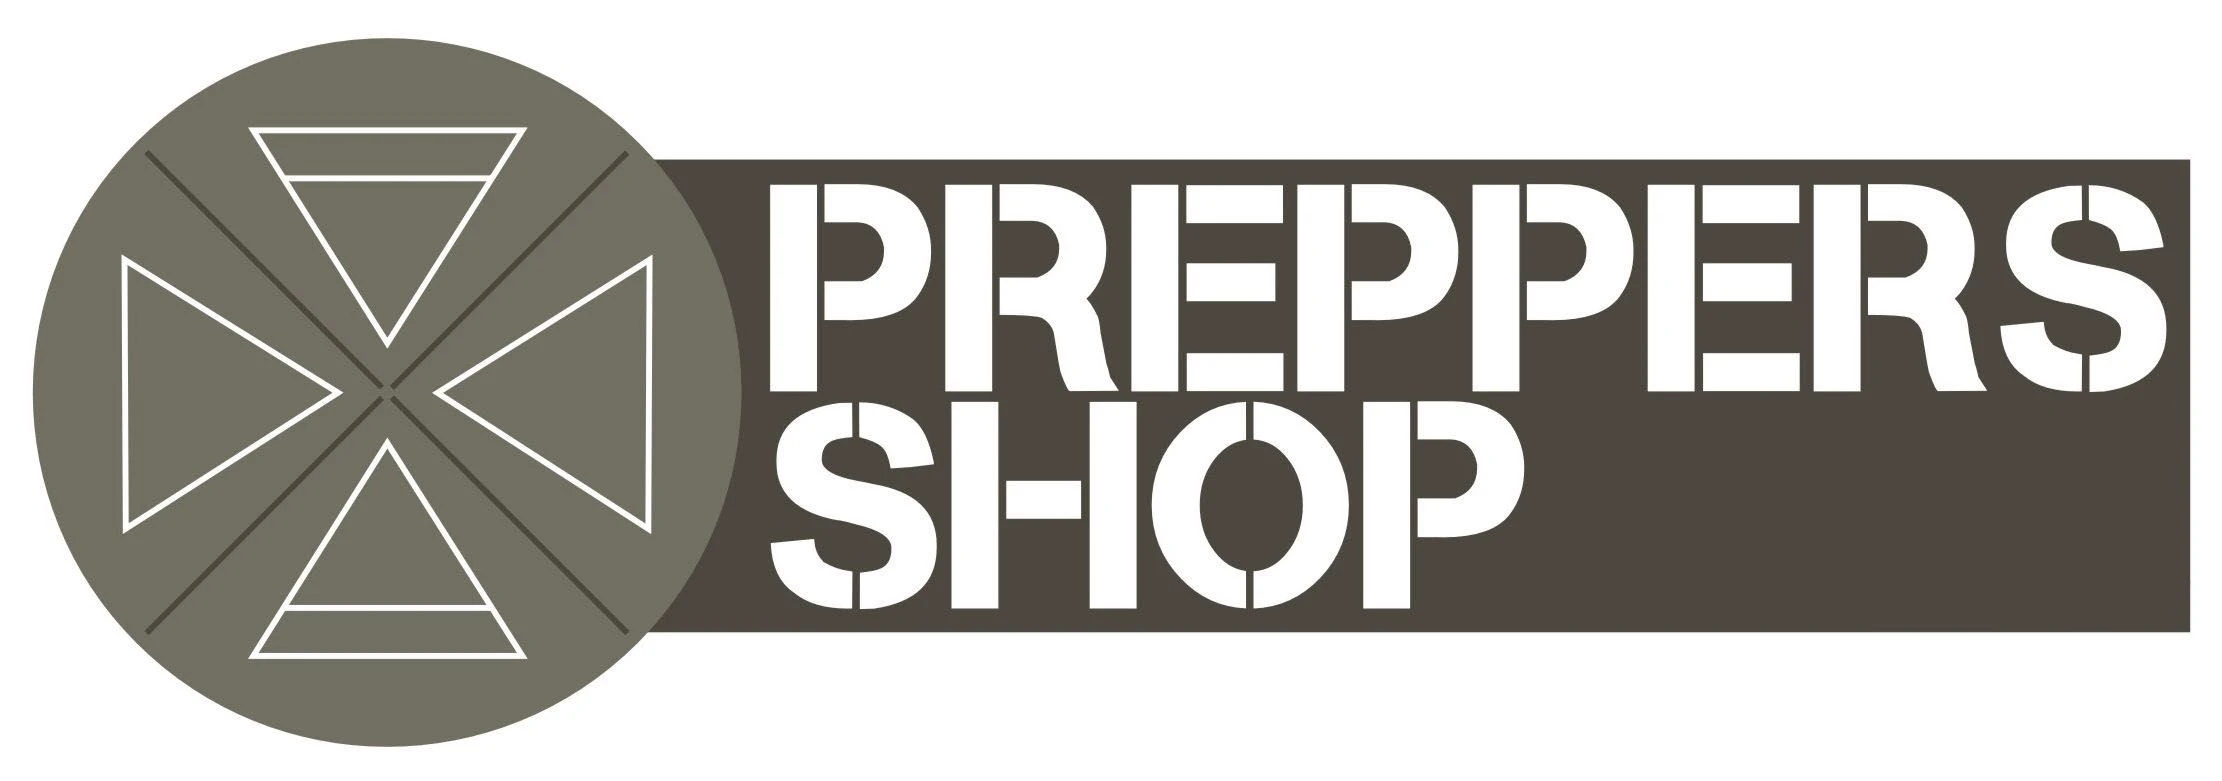 Preppers Shop Promo Code 